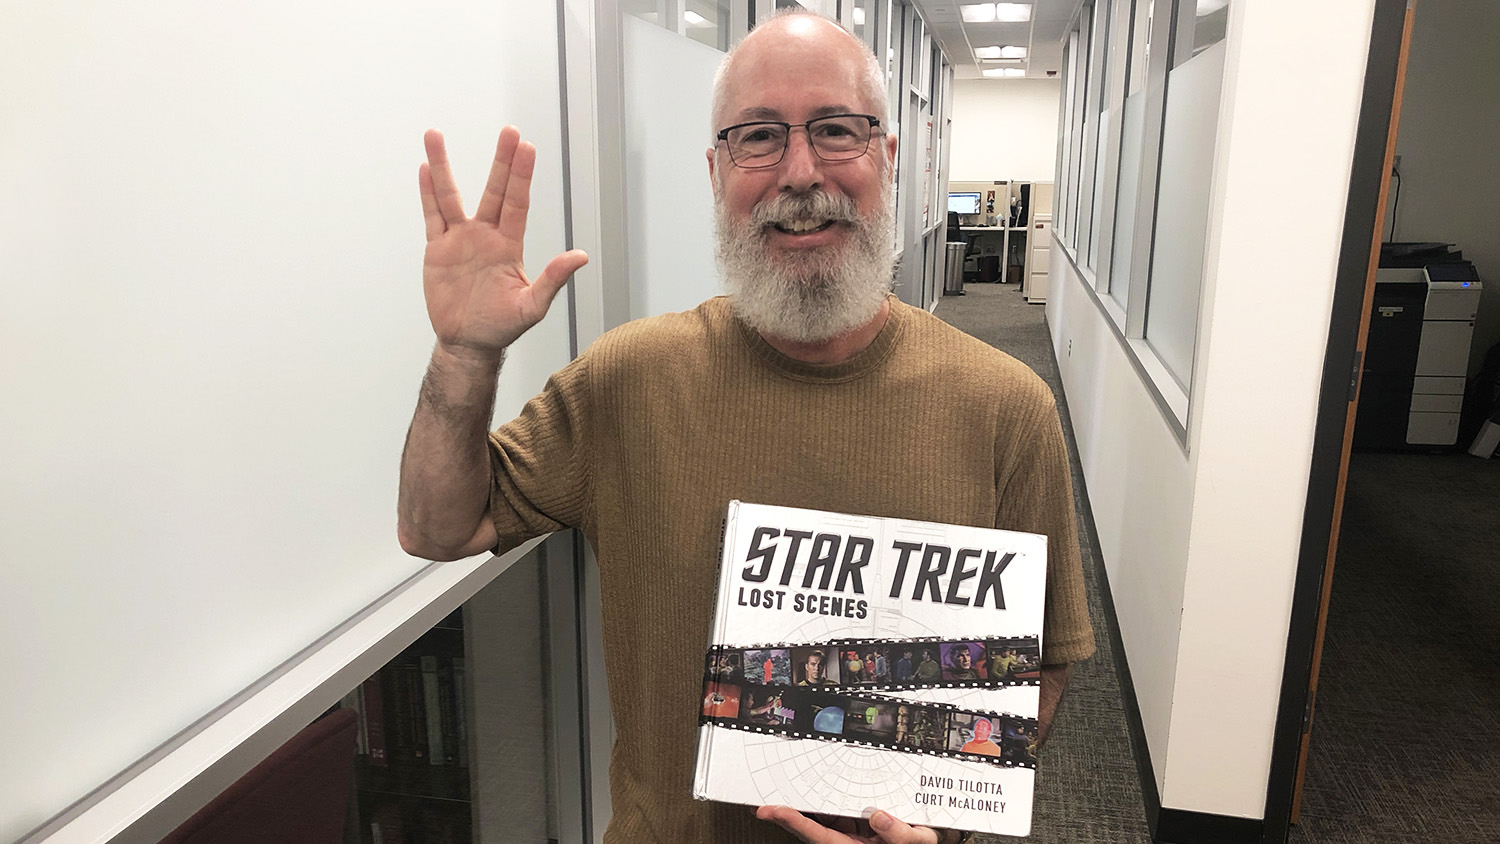 Chemist by Day, Trekkie by Night - David Tilotta holds the book he wrote on Star Trek's lost scenes